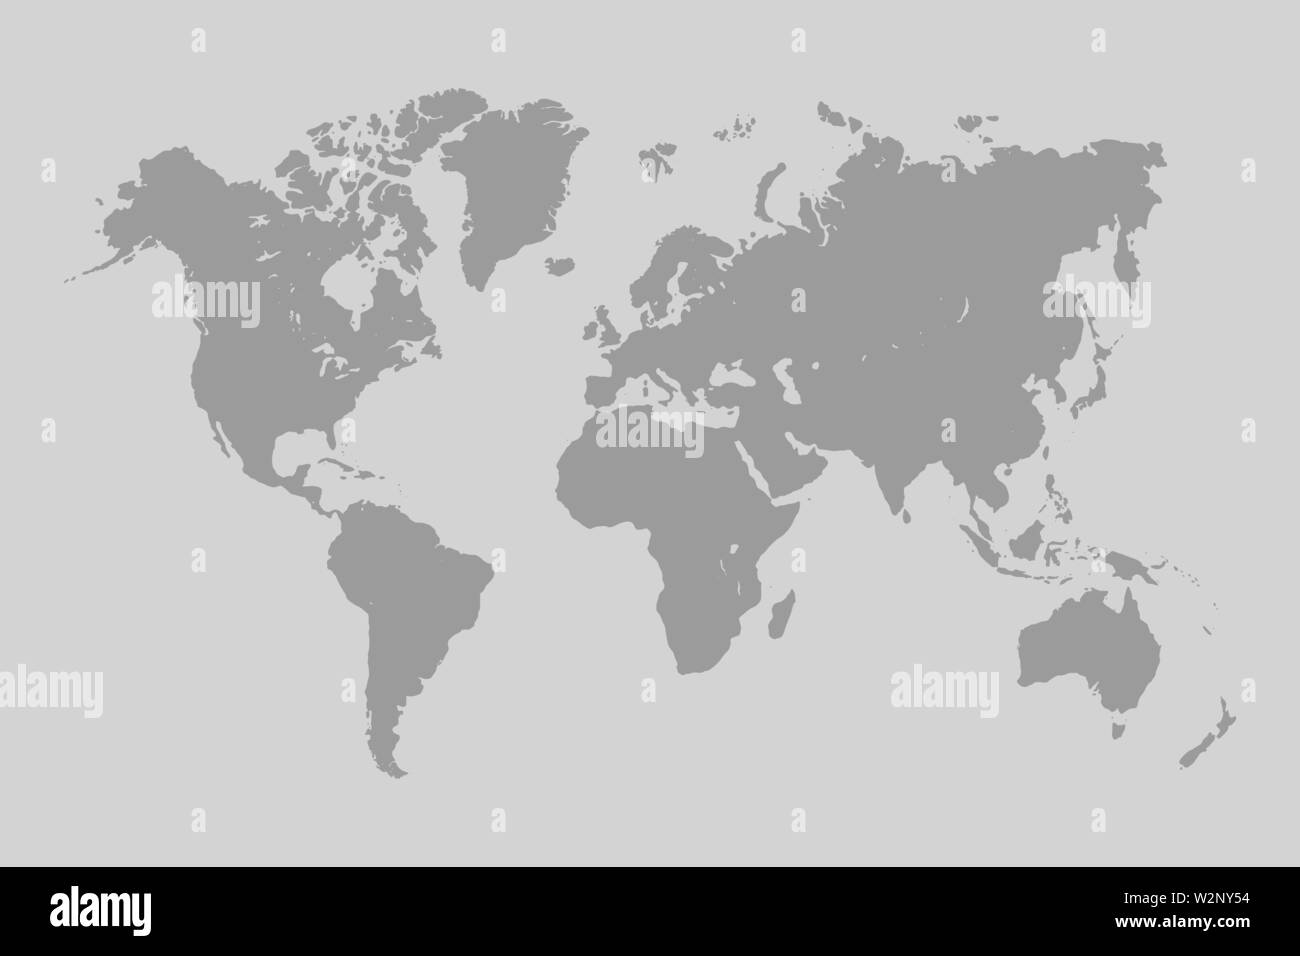 Welt Vektorkarte in dunklem Grau Farben Stock Vektor